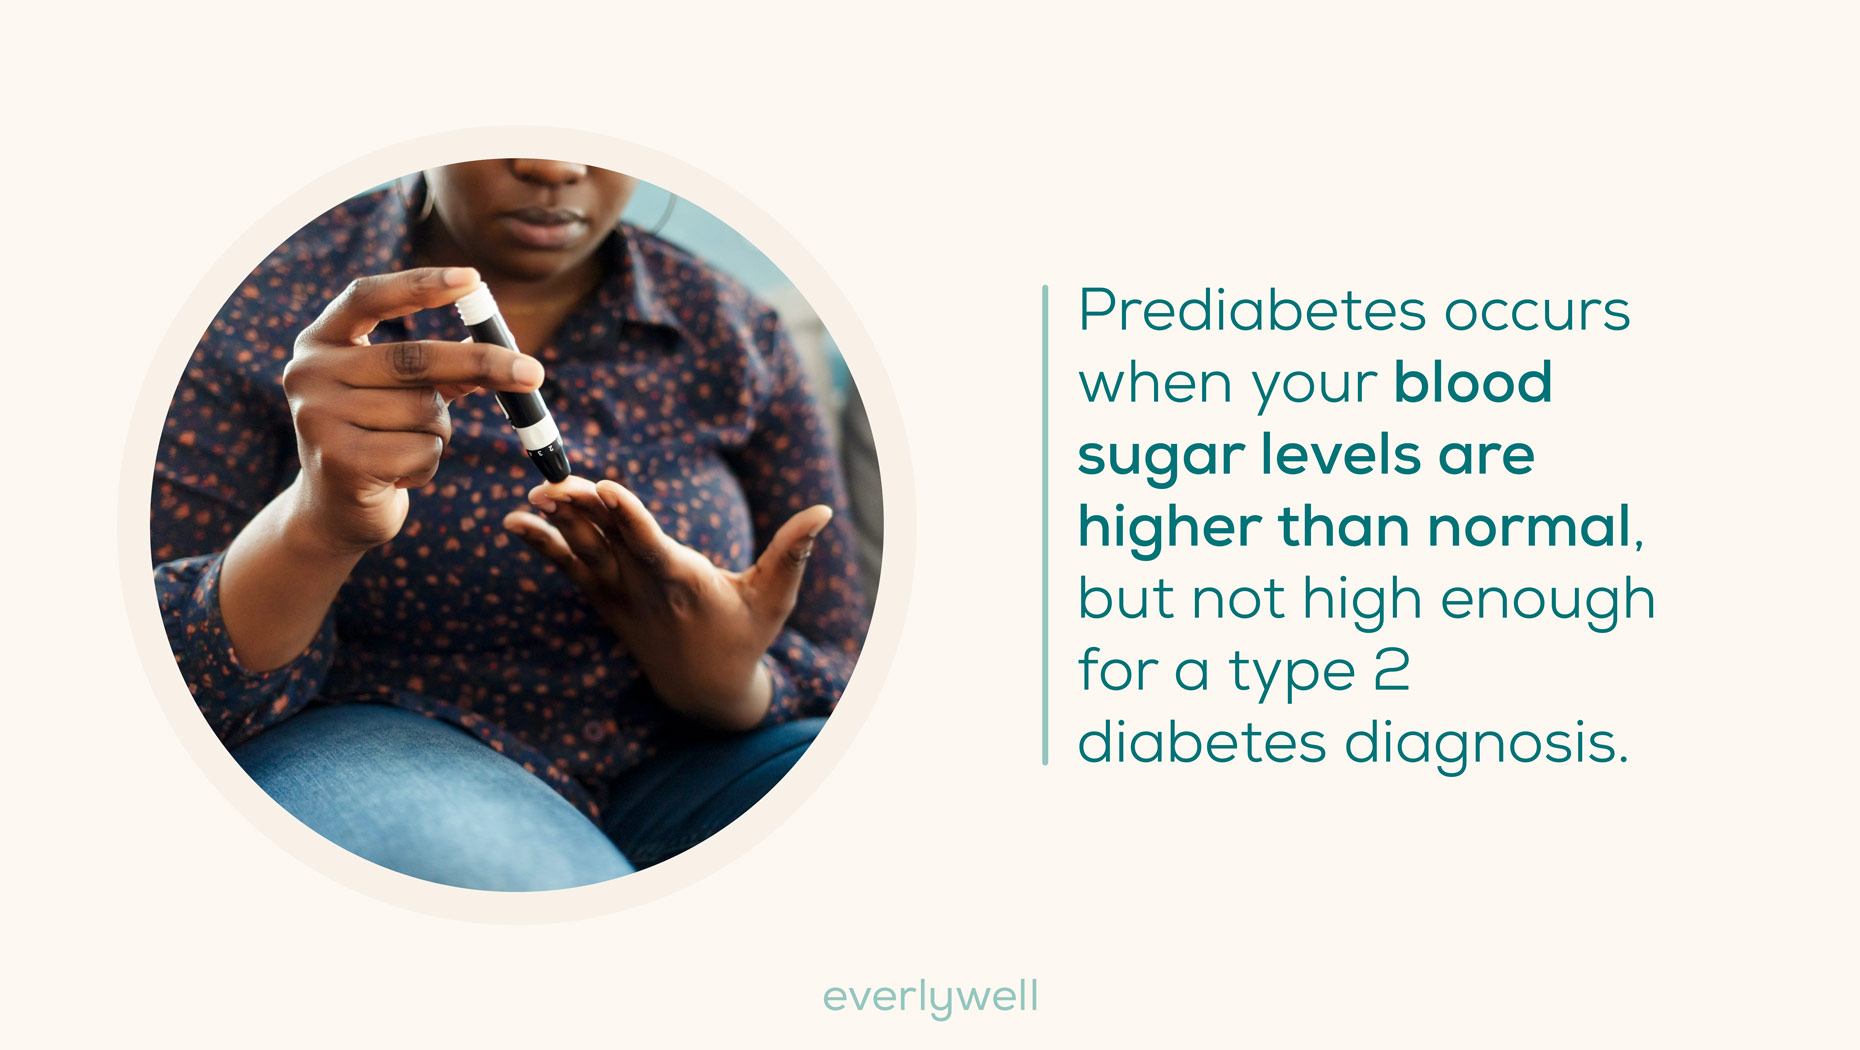 prediabetes-blood-sugars-higer-than-normal